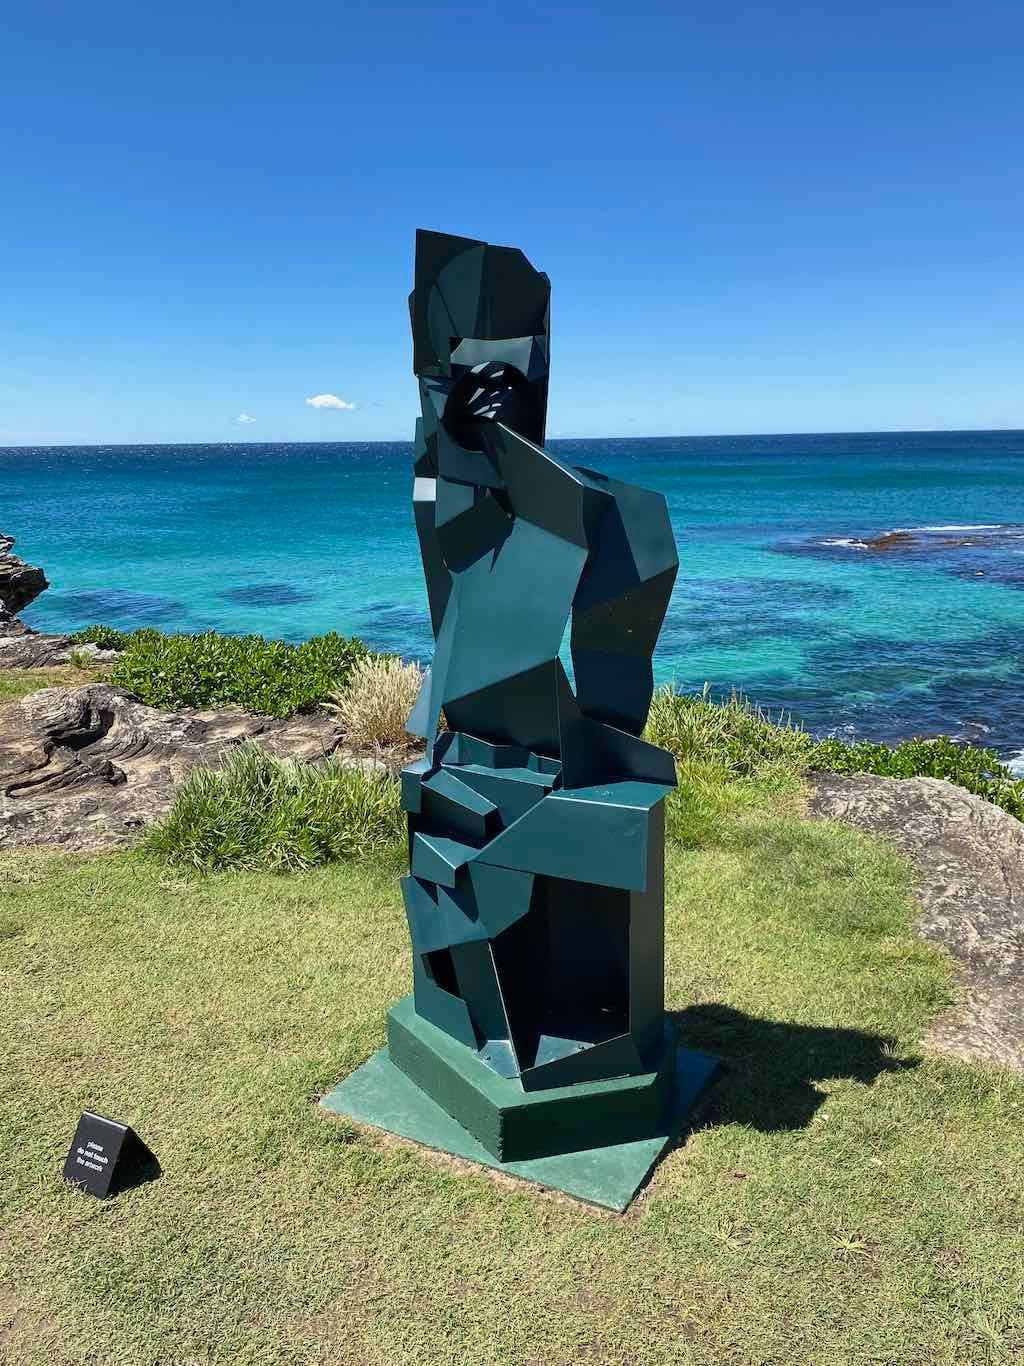 2022 Public Day Tour Sculptures by The Sea Image -6361cfd16d4d1